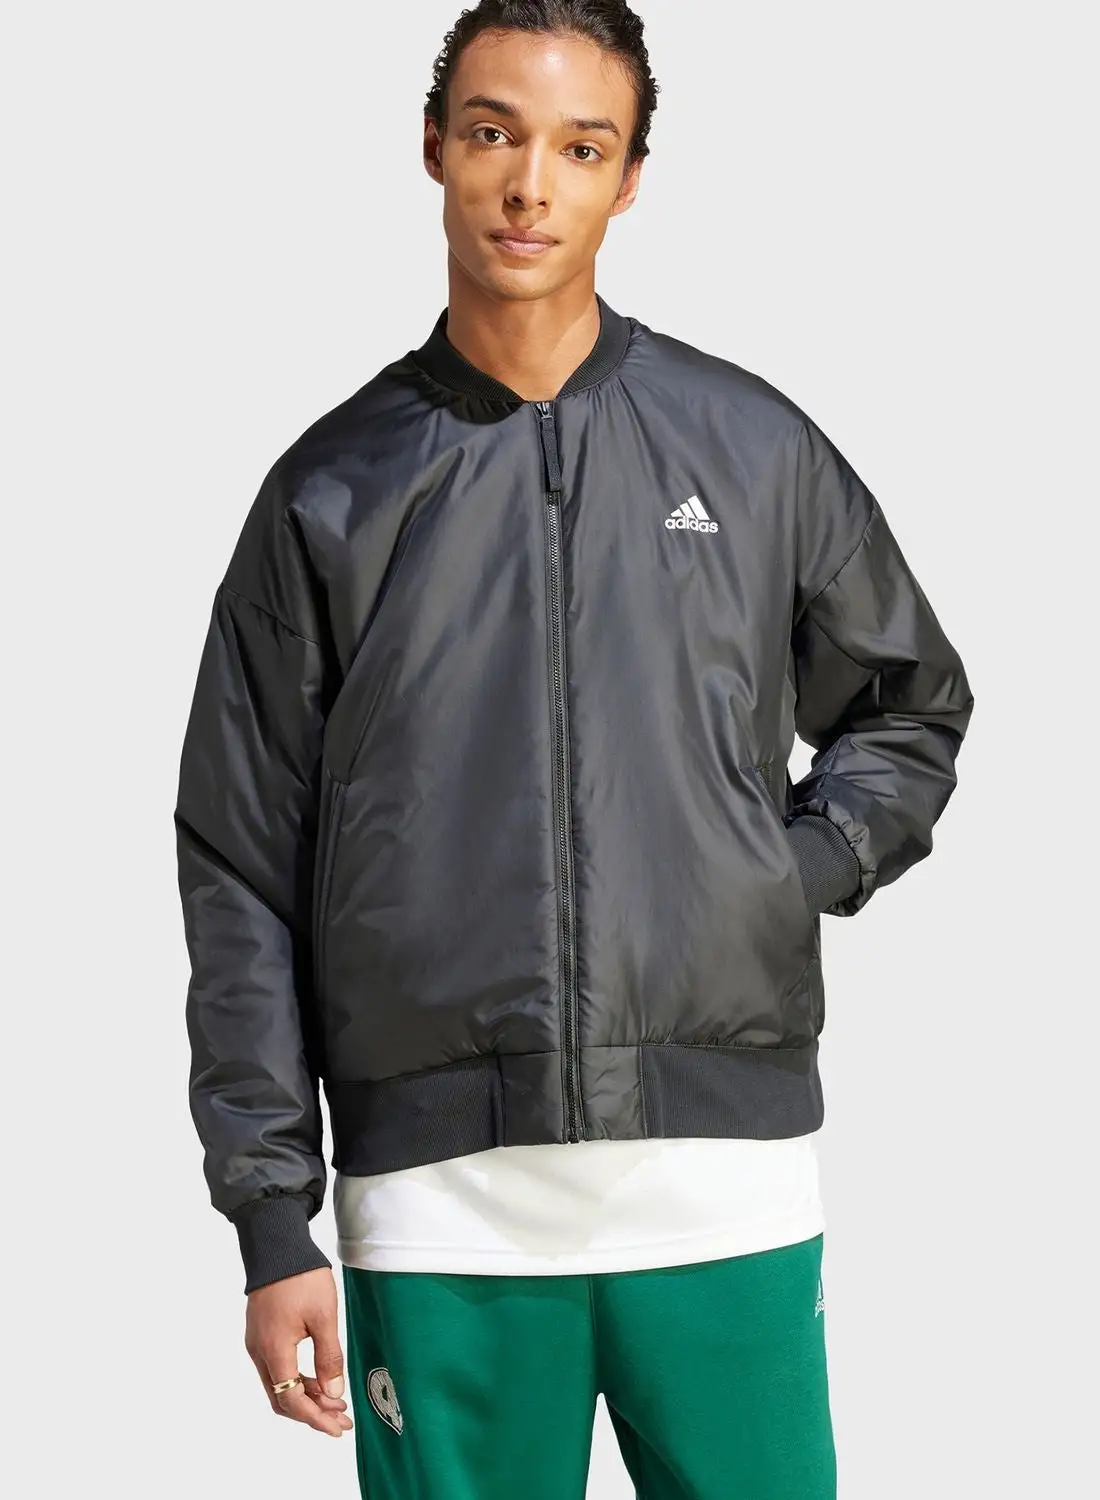 Adidas Brand Love Jacket